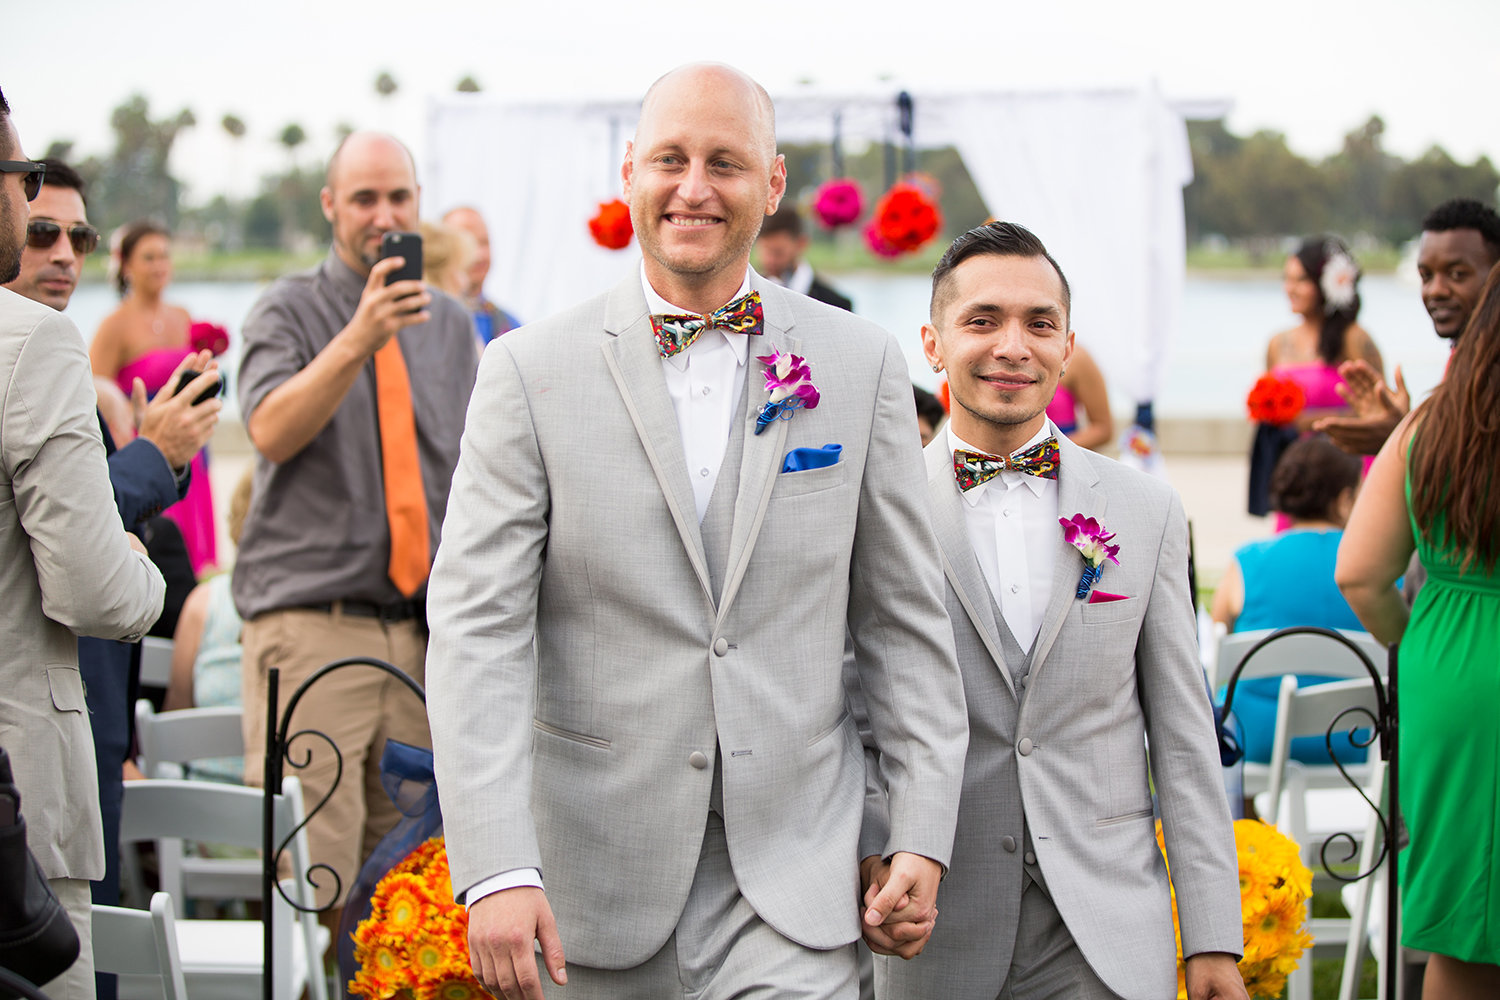 Newlyweds! Recessional after wedding ceremony at Coronado Community Center